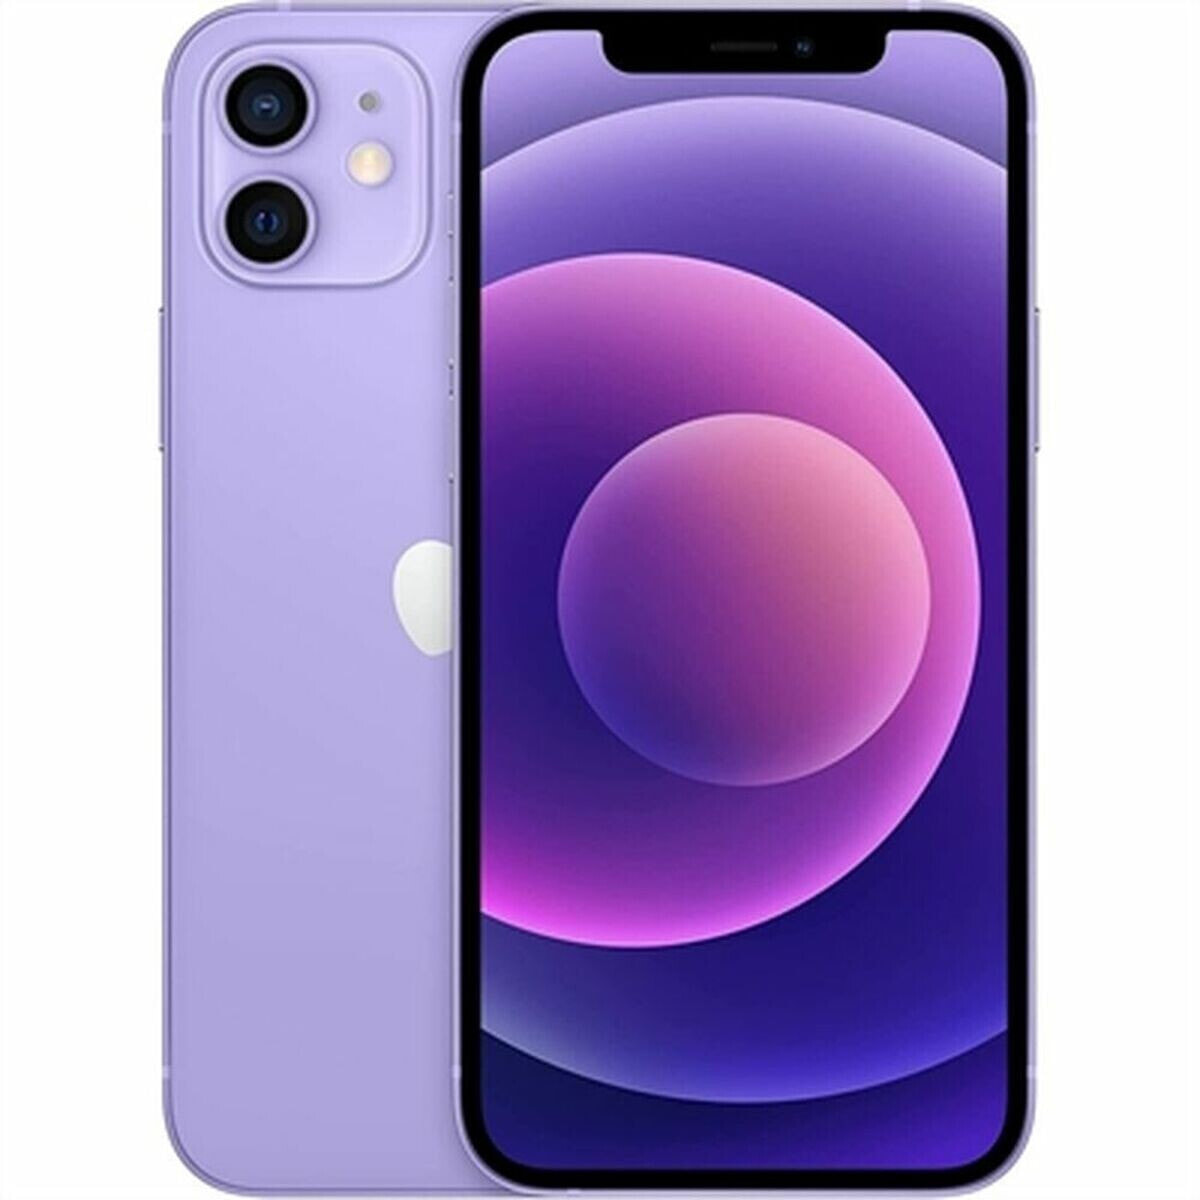 Смартфоны Apple iPhone 12 6,1 OLED HEXACORE 64 GB Фиолетовый A14 6,1